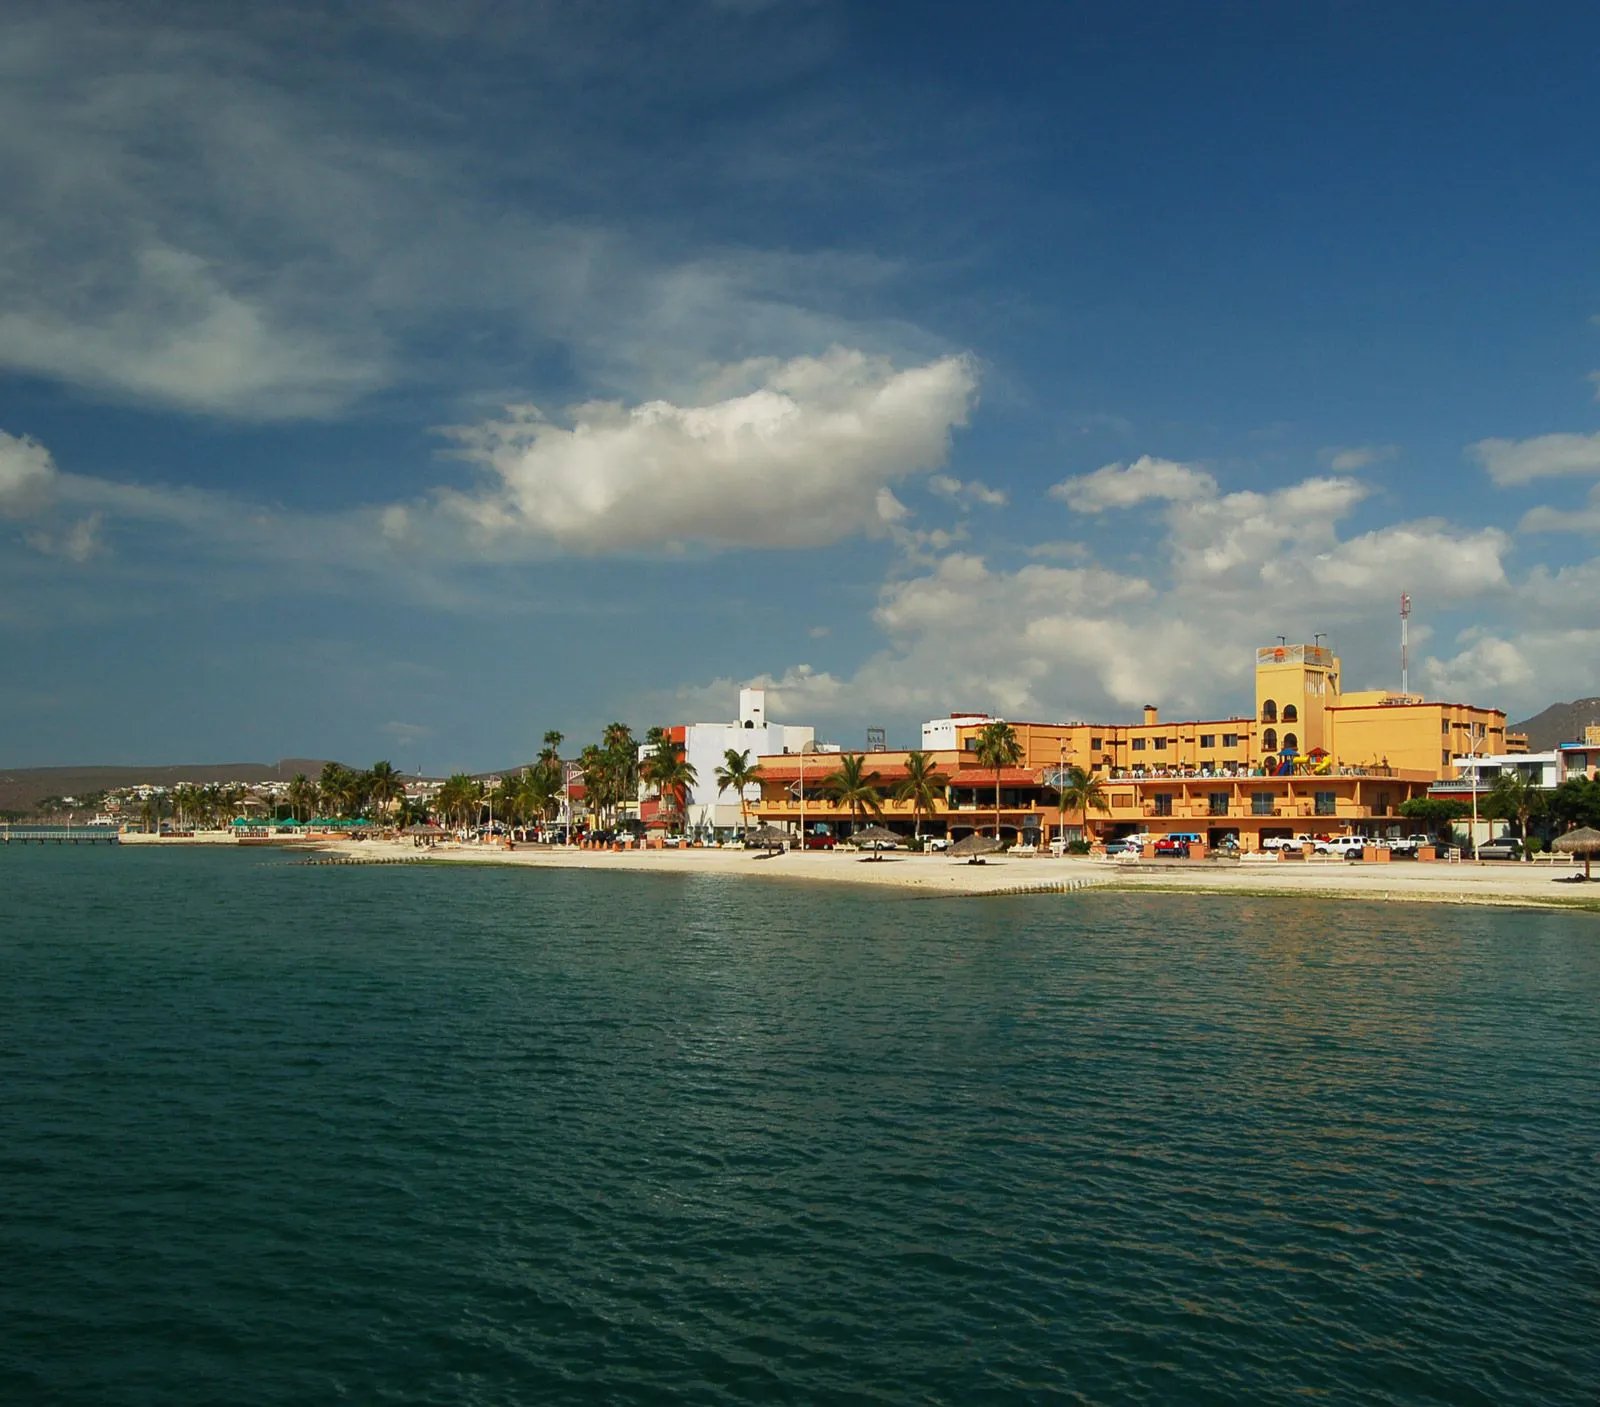 La Paz beach and resort by the sea